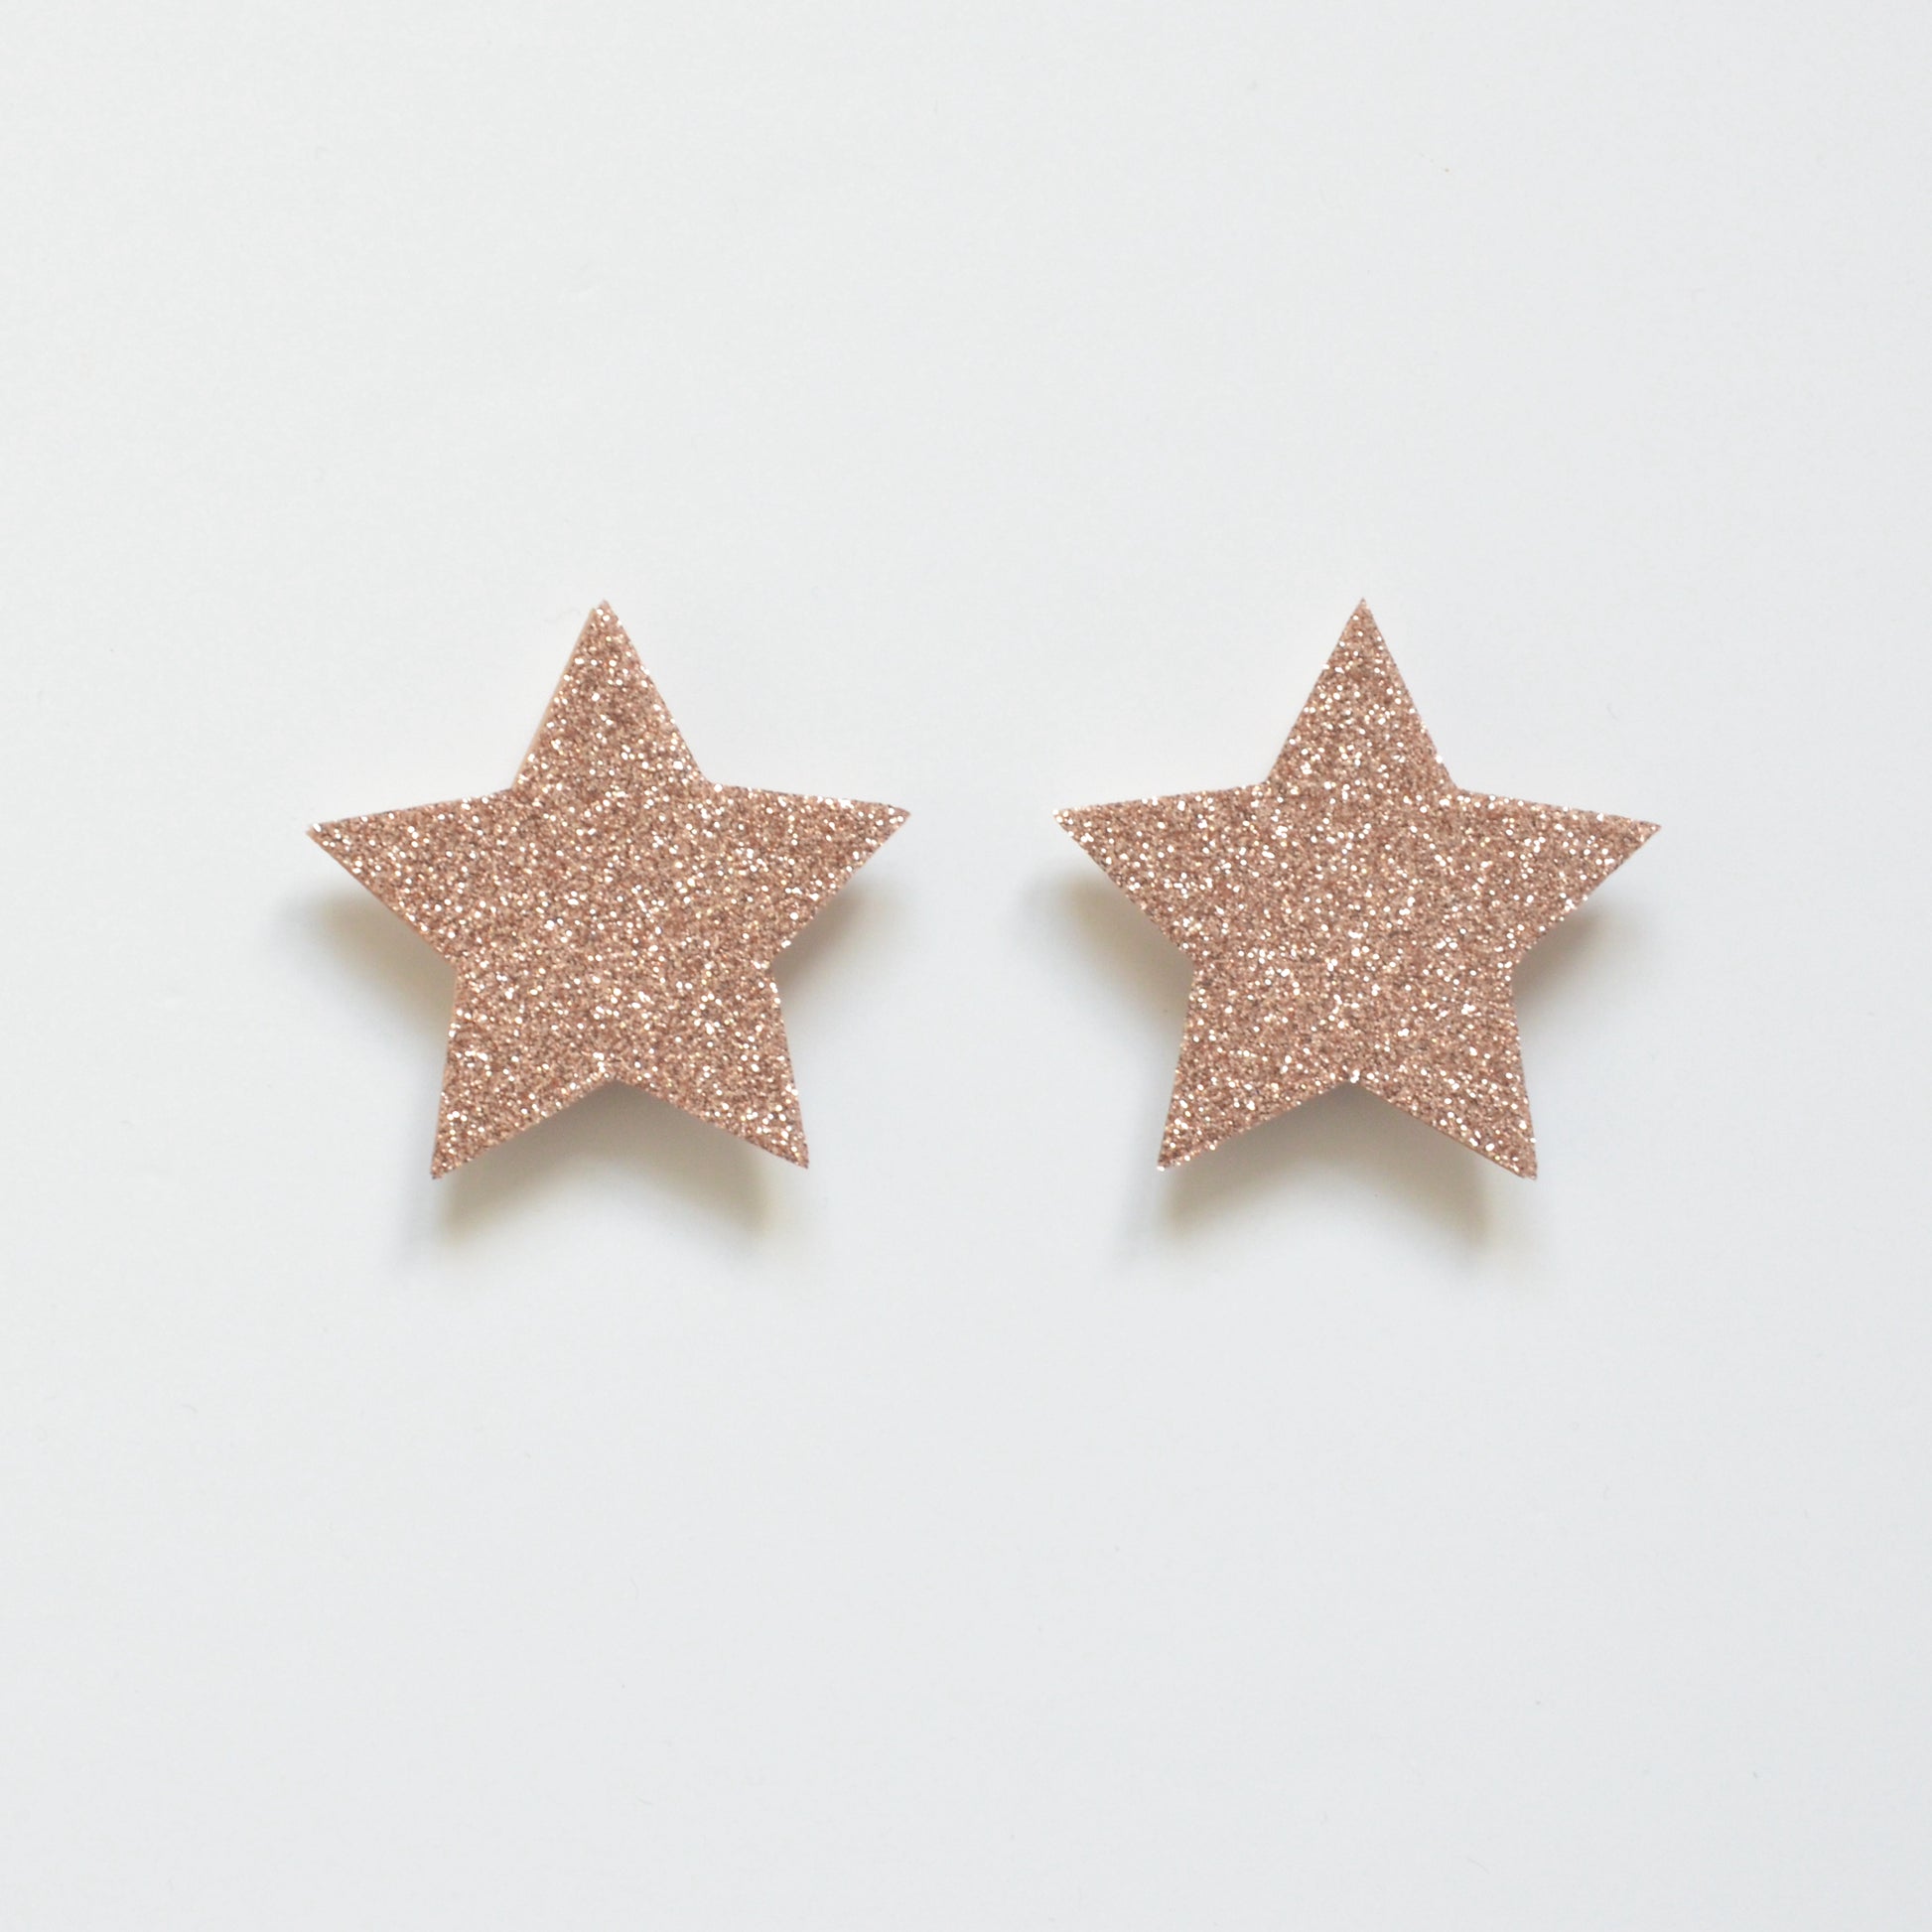 Decorative star hooks